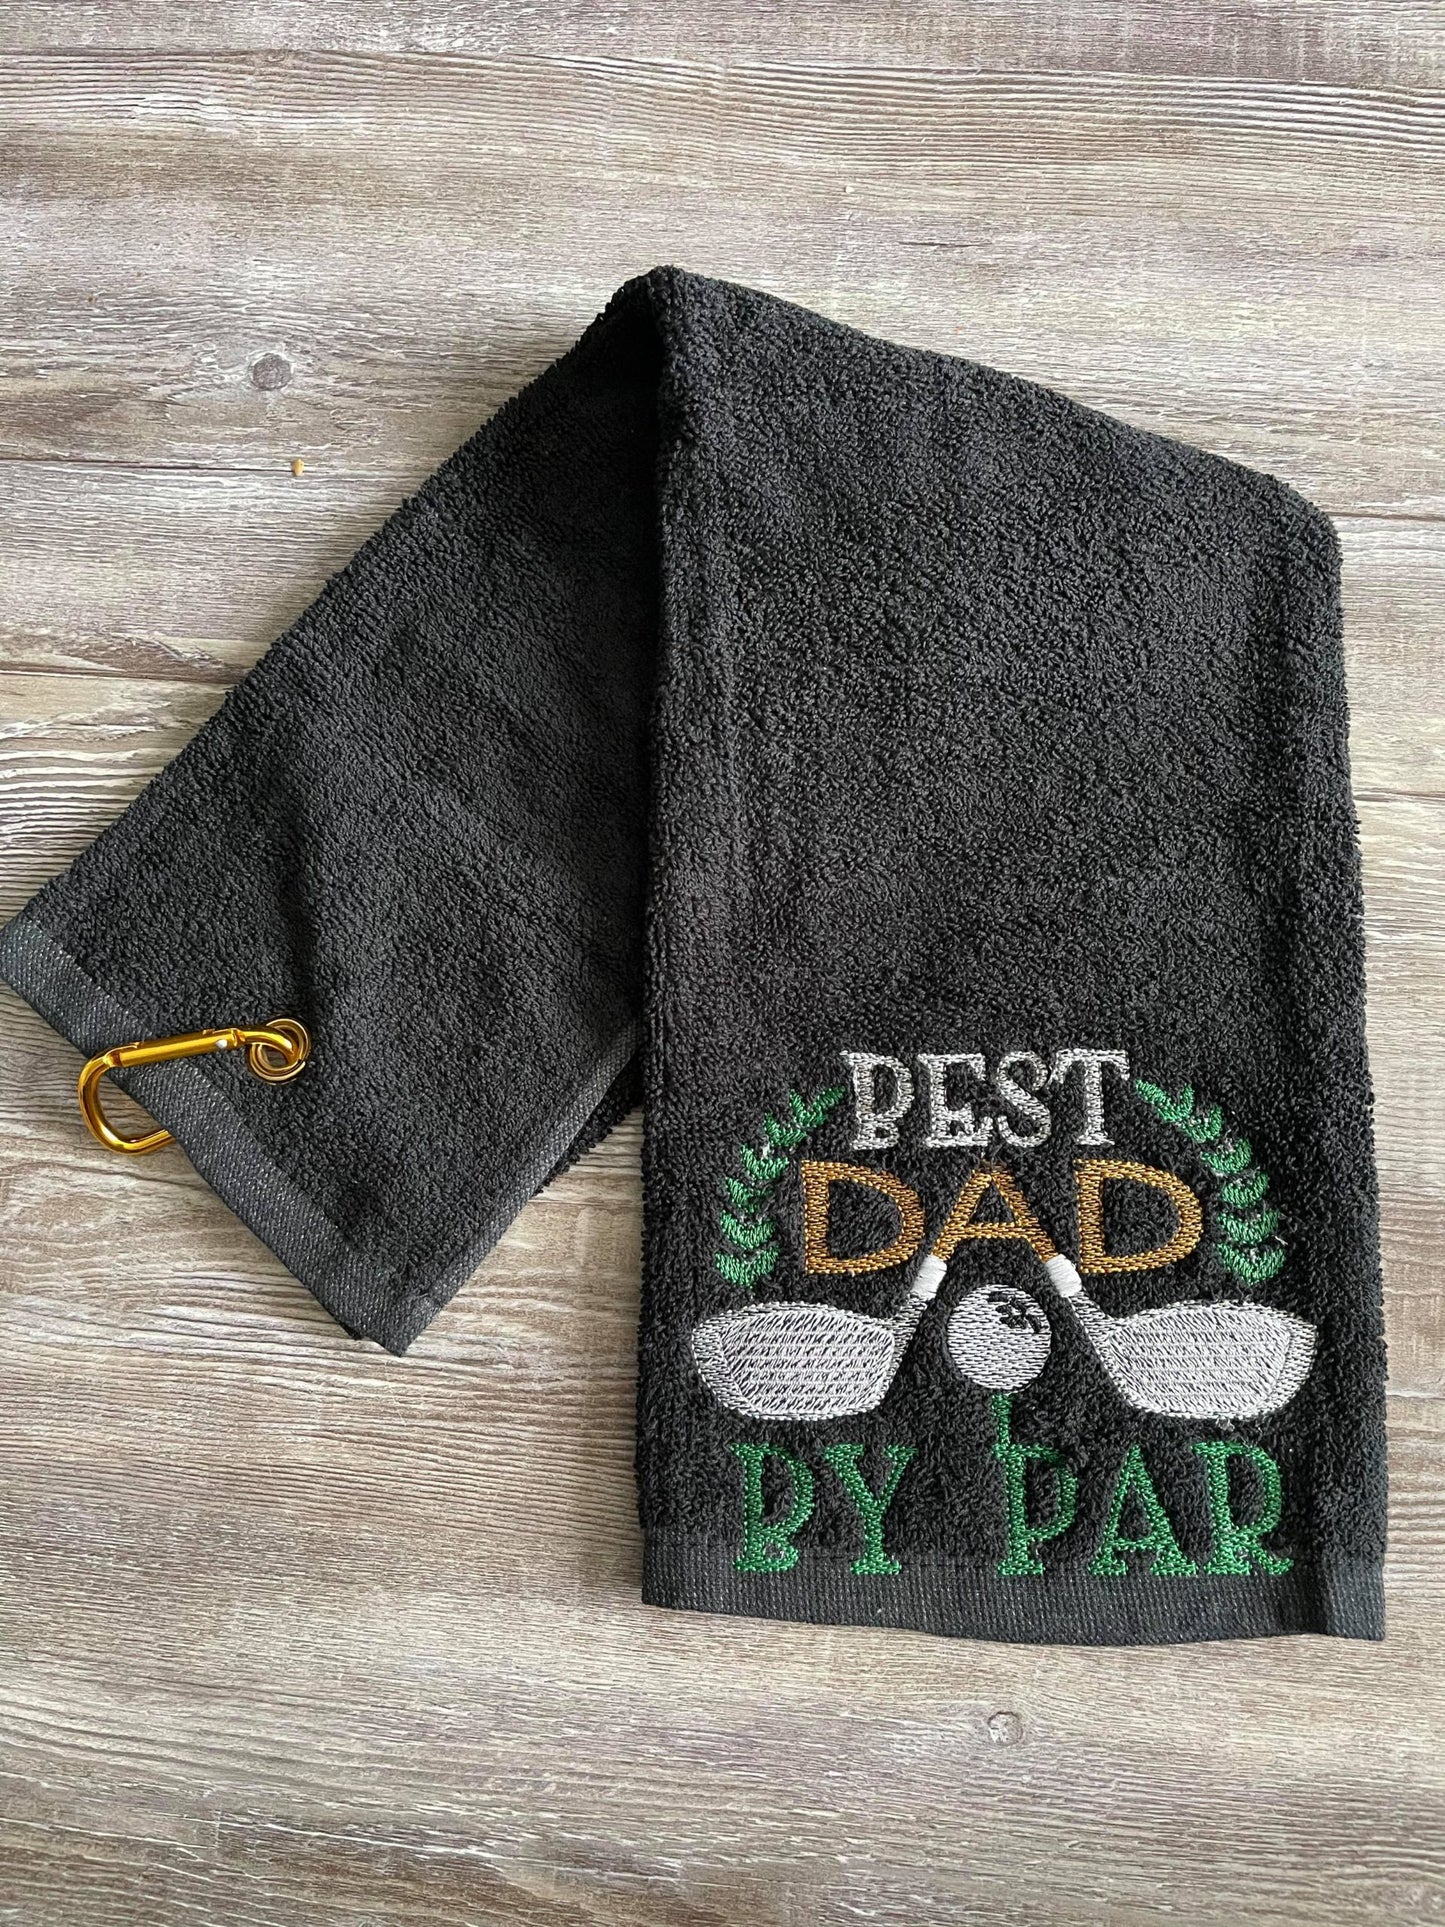 Best Dad by Par - 3 sizes- Digital Embroidery Design